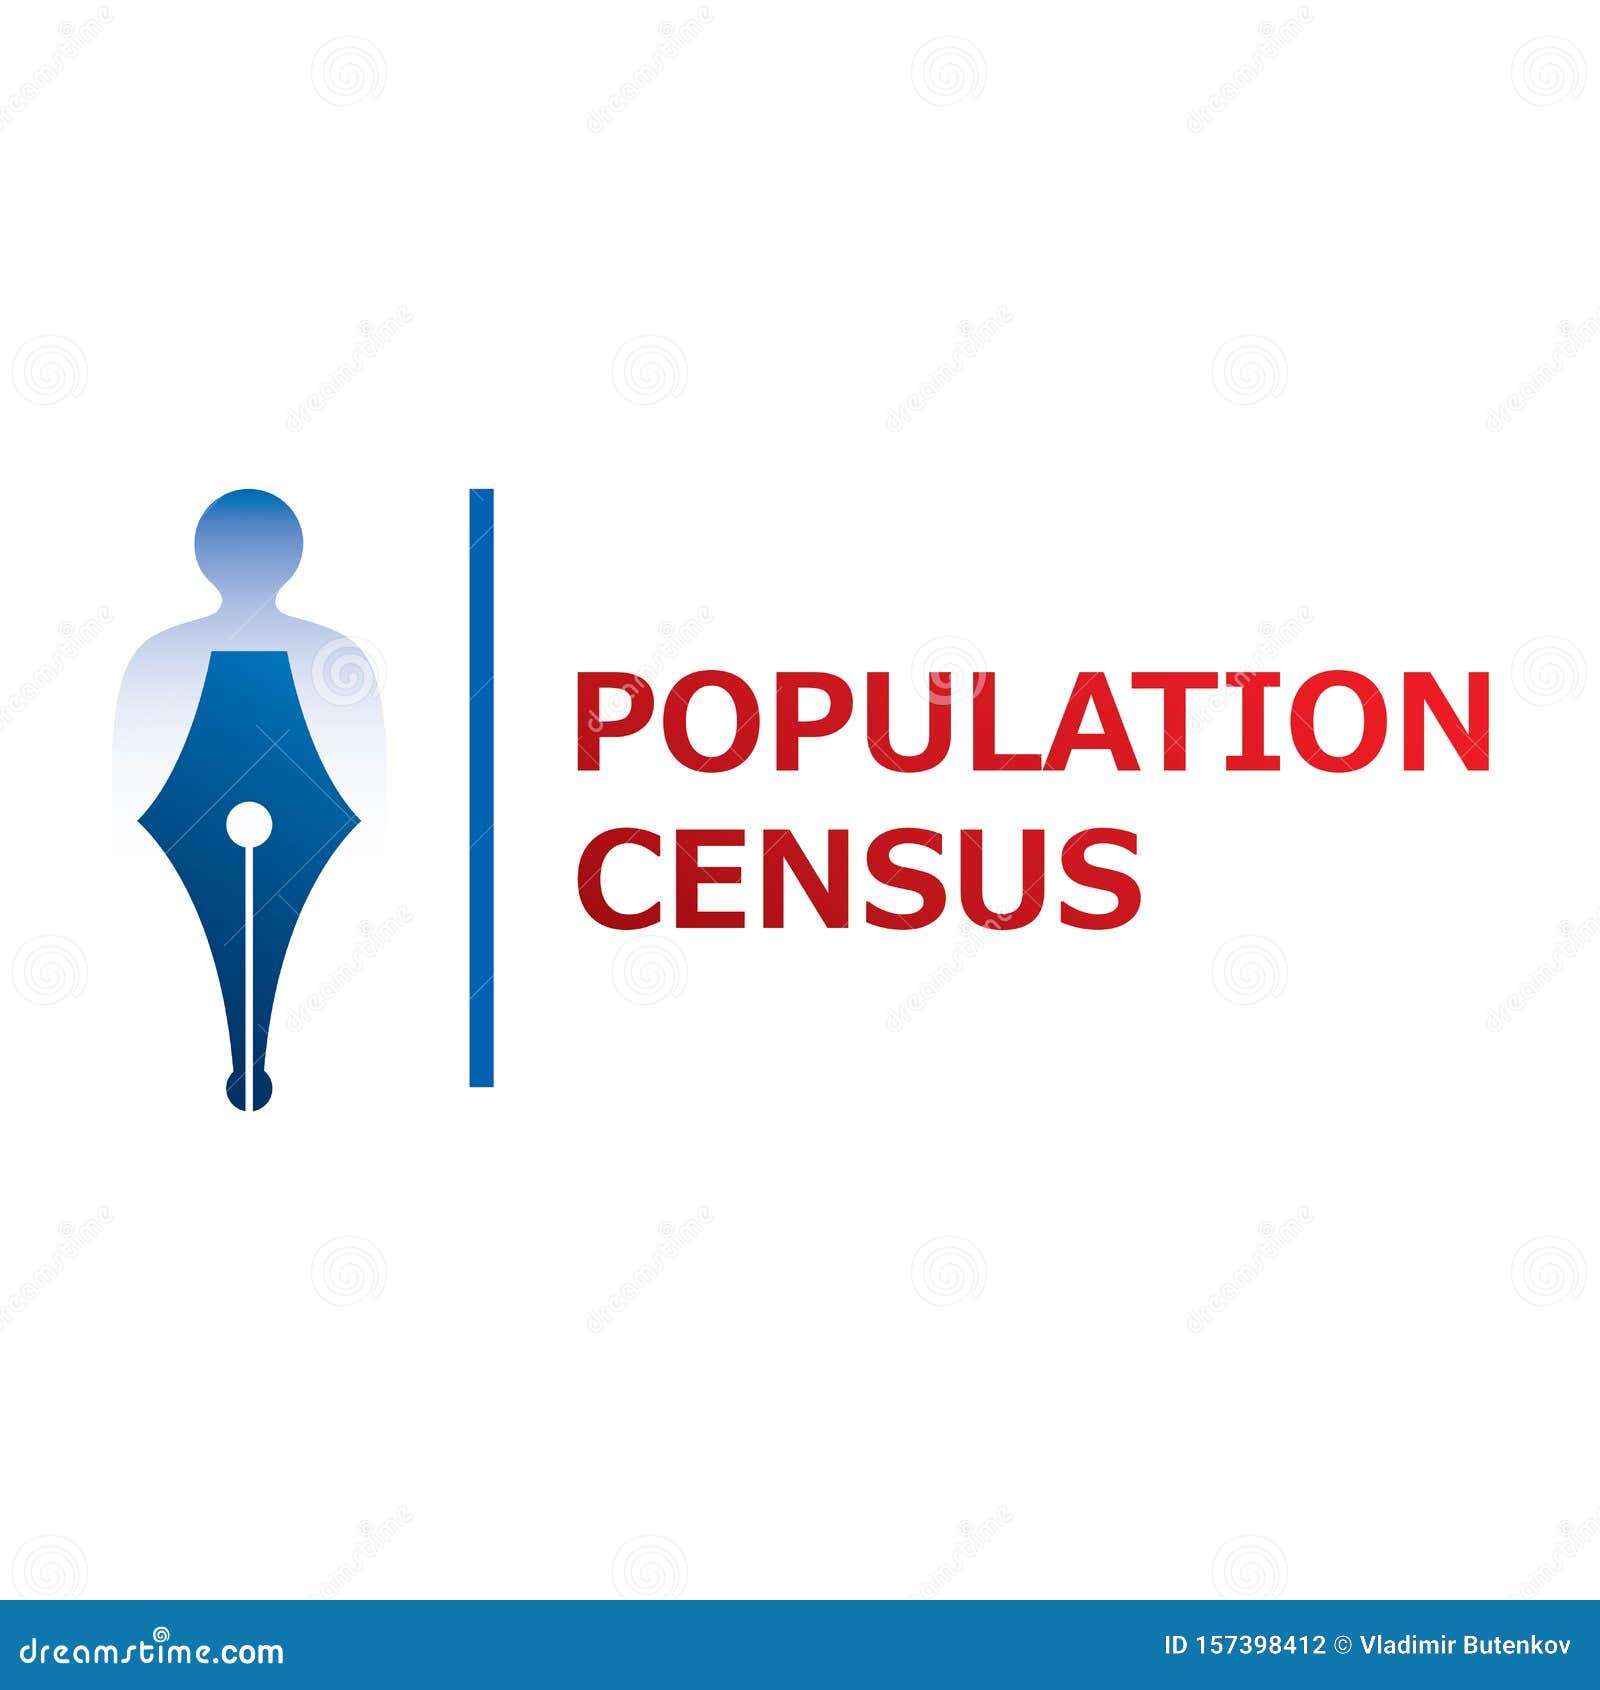  logo for census, population count and demographic statistics